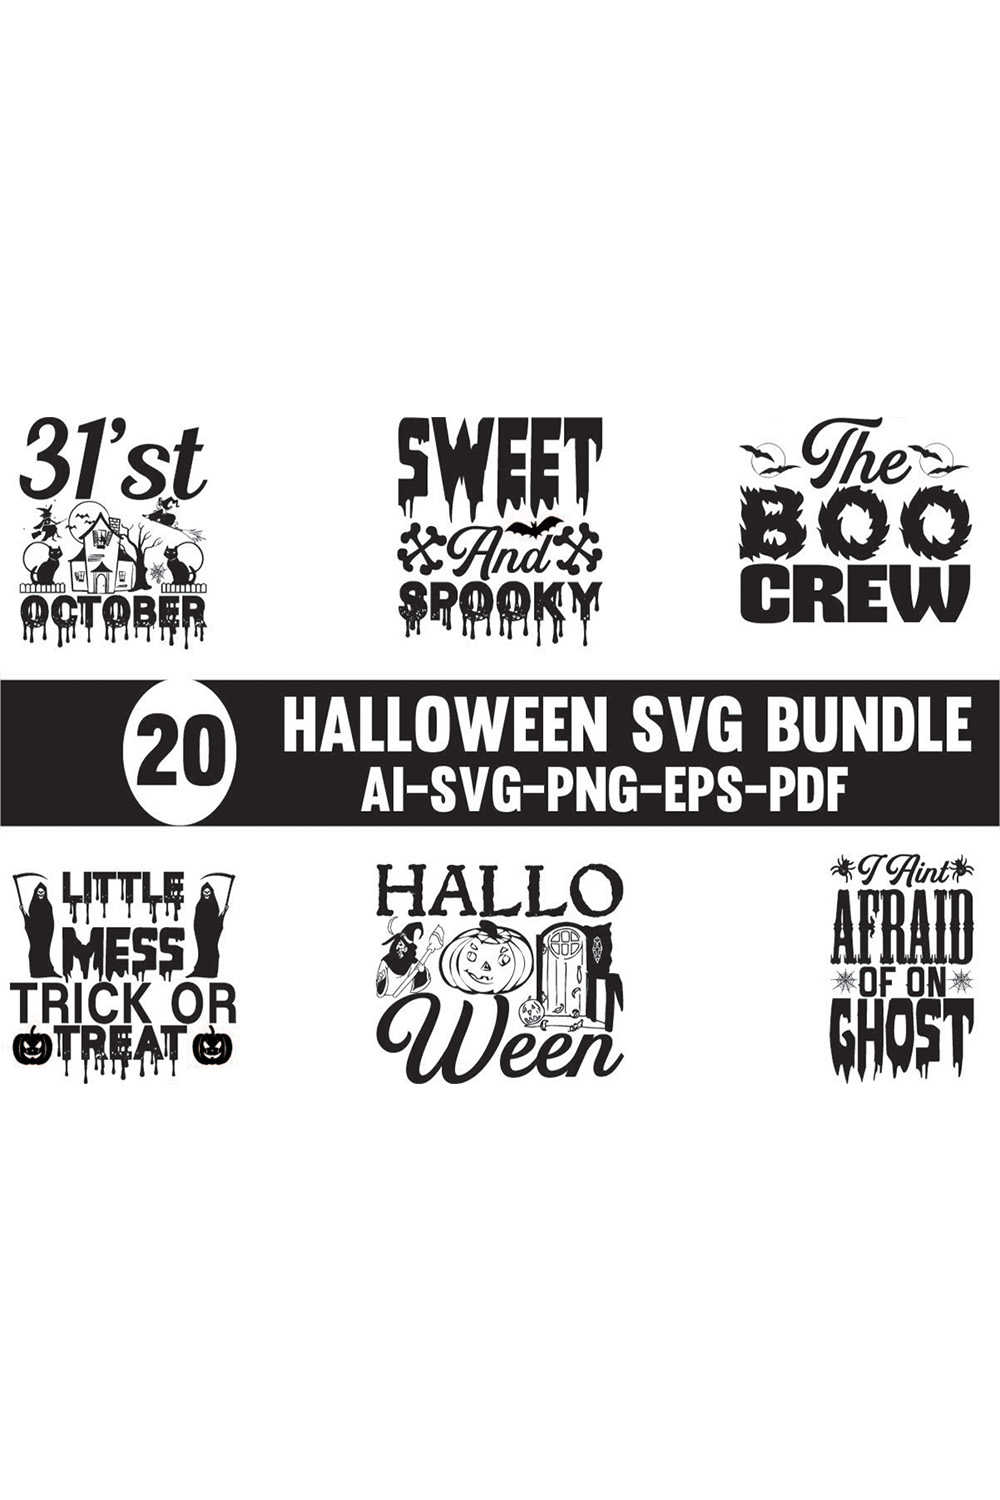 Halloween SVG Design Bundle - Pinterest.